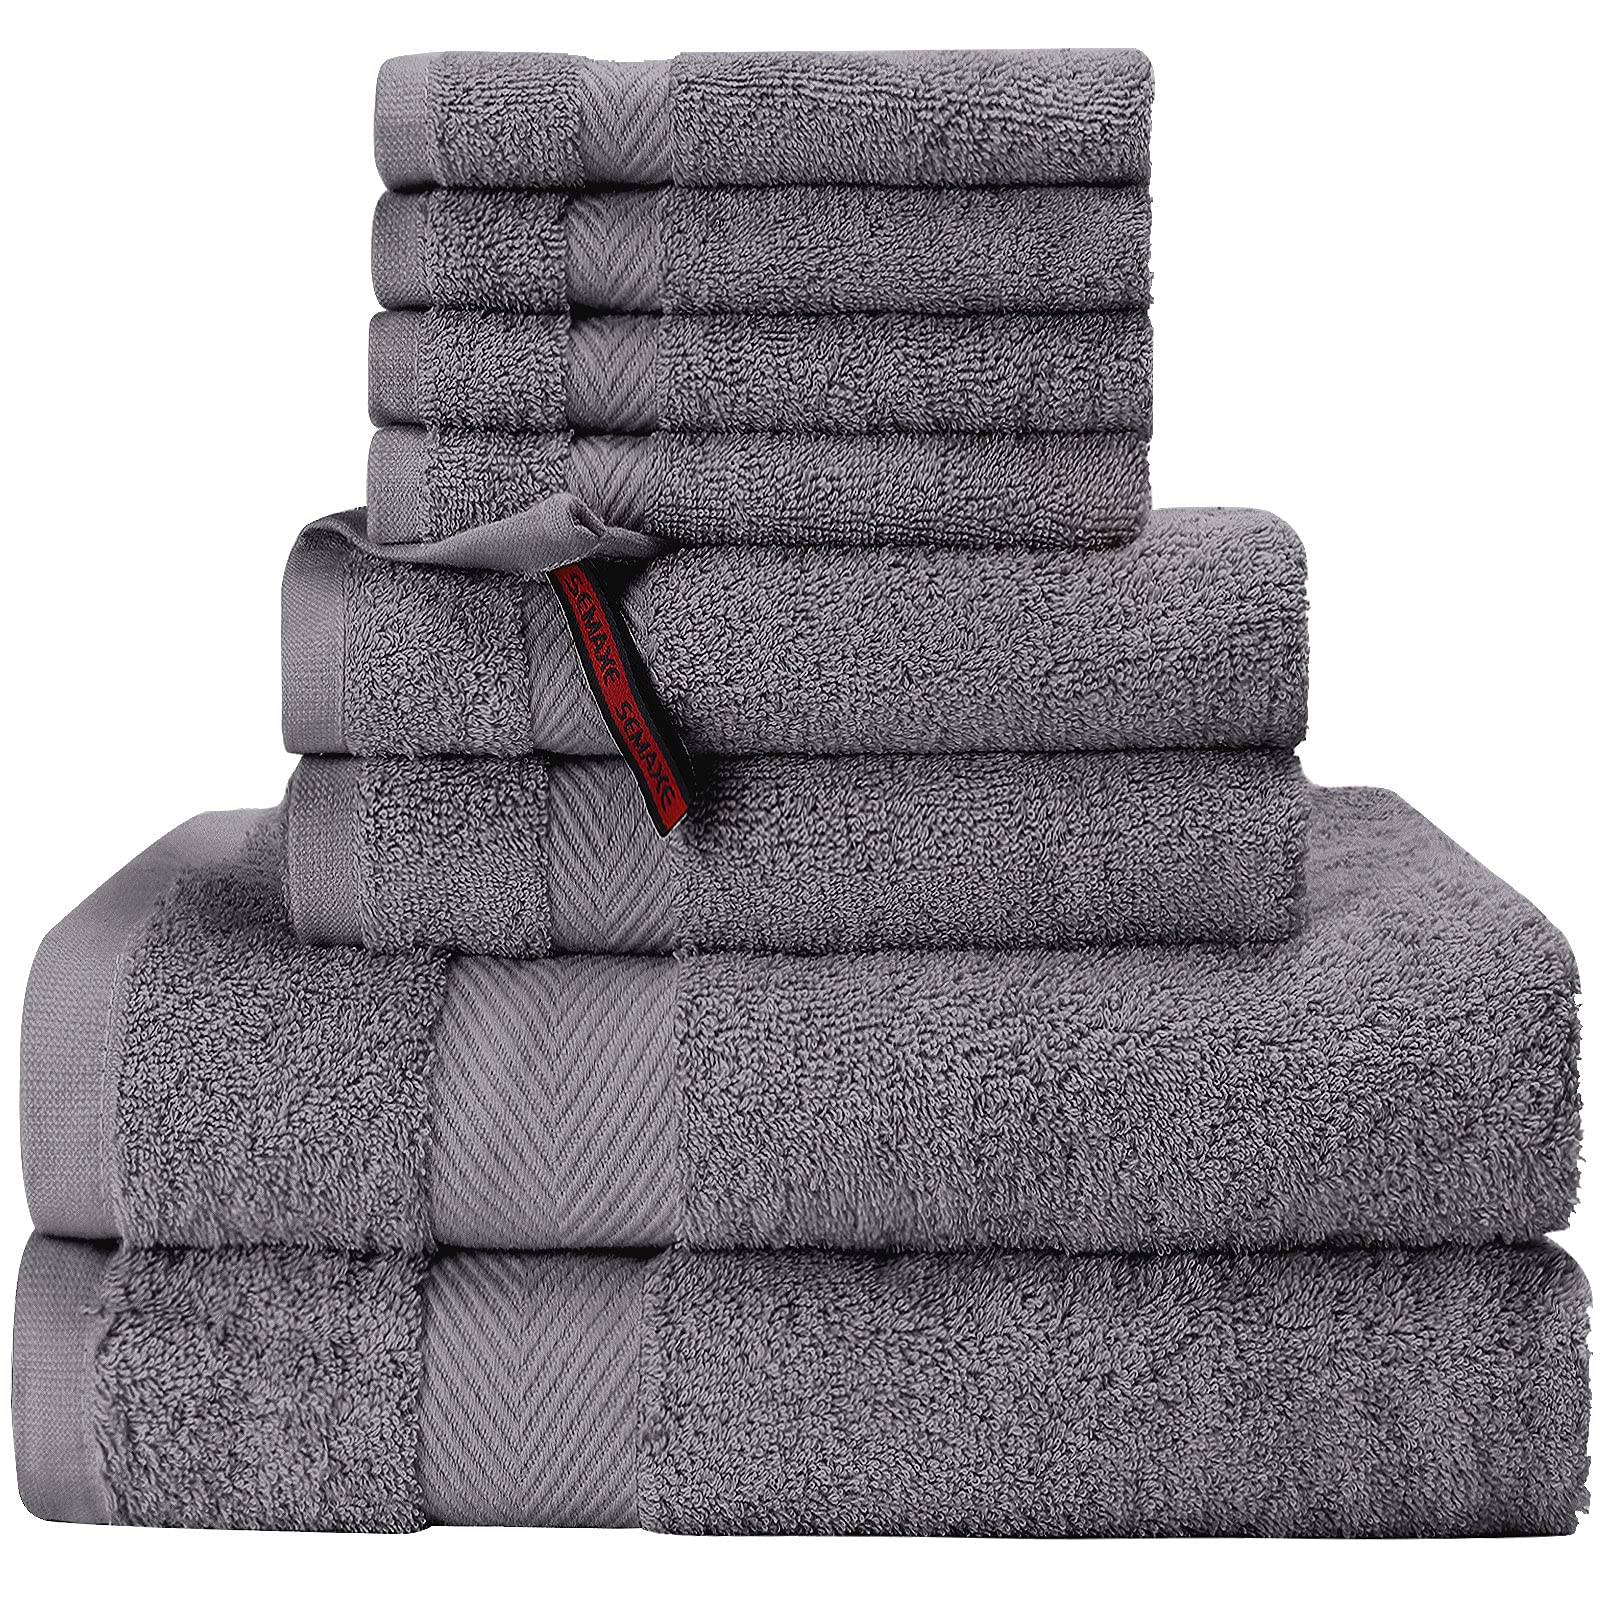 SEMAXE Grey Bath Towels Set , 2 Large Bath Towels , 2 Hand Towels , 4 Washcloths , 100% Cotton Towel for Bathroom , Soft Fluffy and Absorbent Bathr...